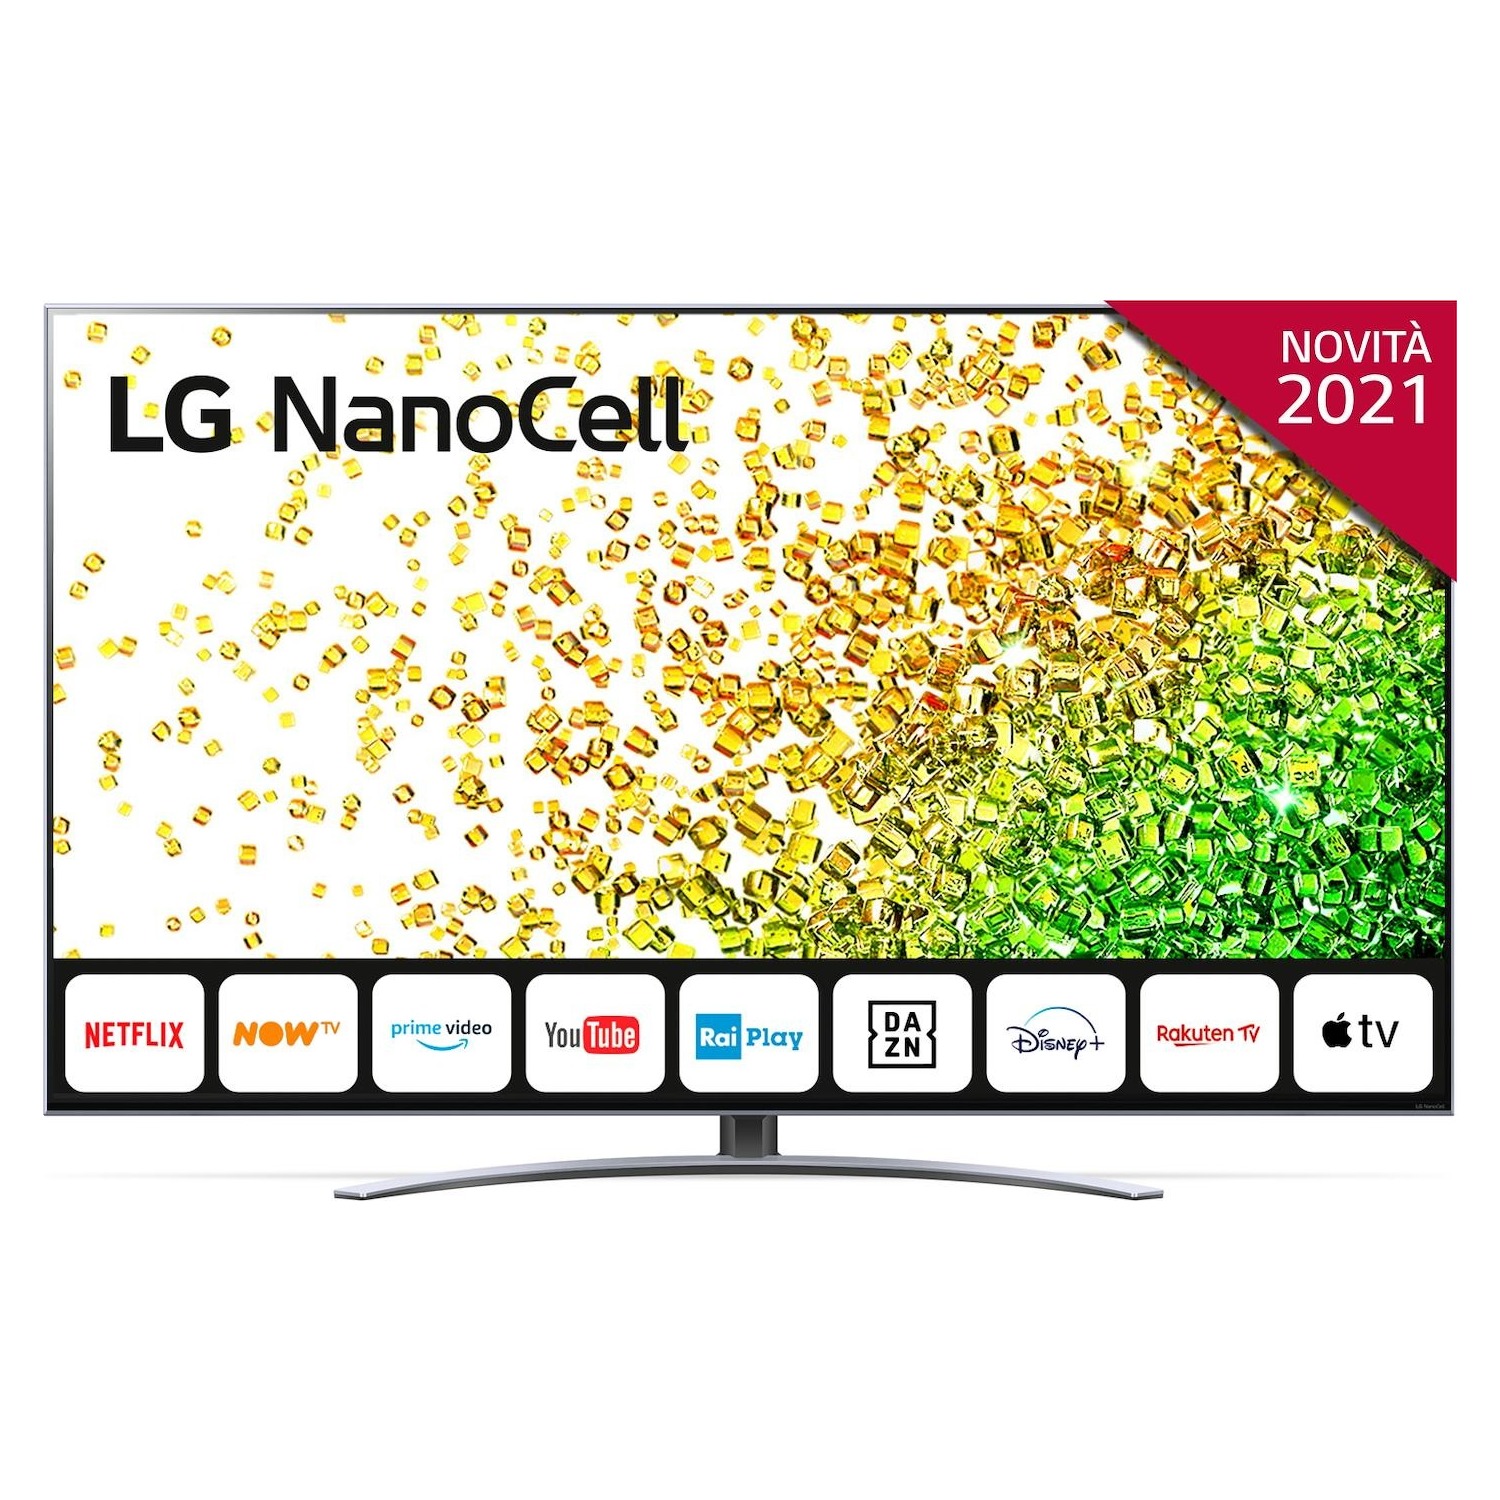 Immagine per TV LED LG 55NANO886 Calibrato 4K e FULL HD da DIMOStore